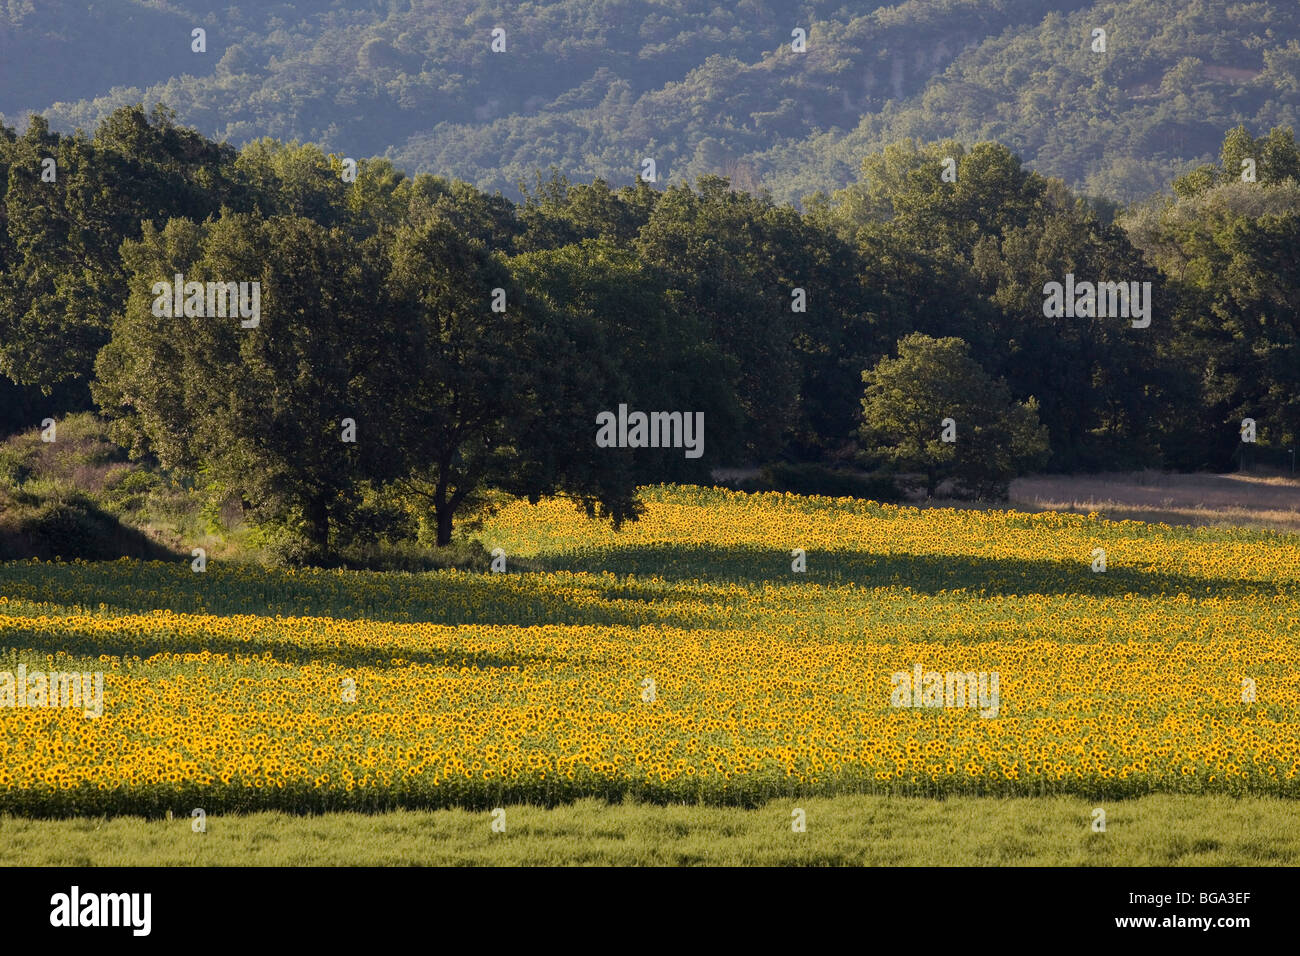 France, Alpes de Haute-Provence, sunflowers Stock Photo